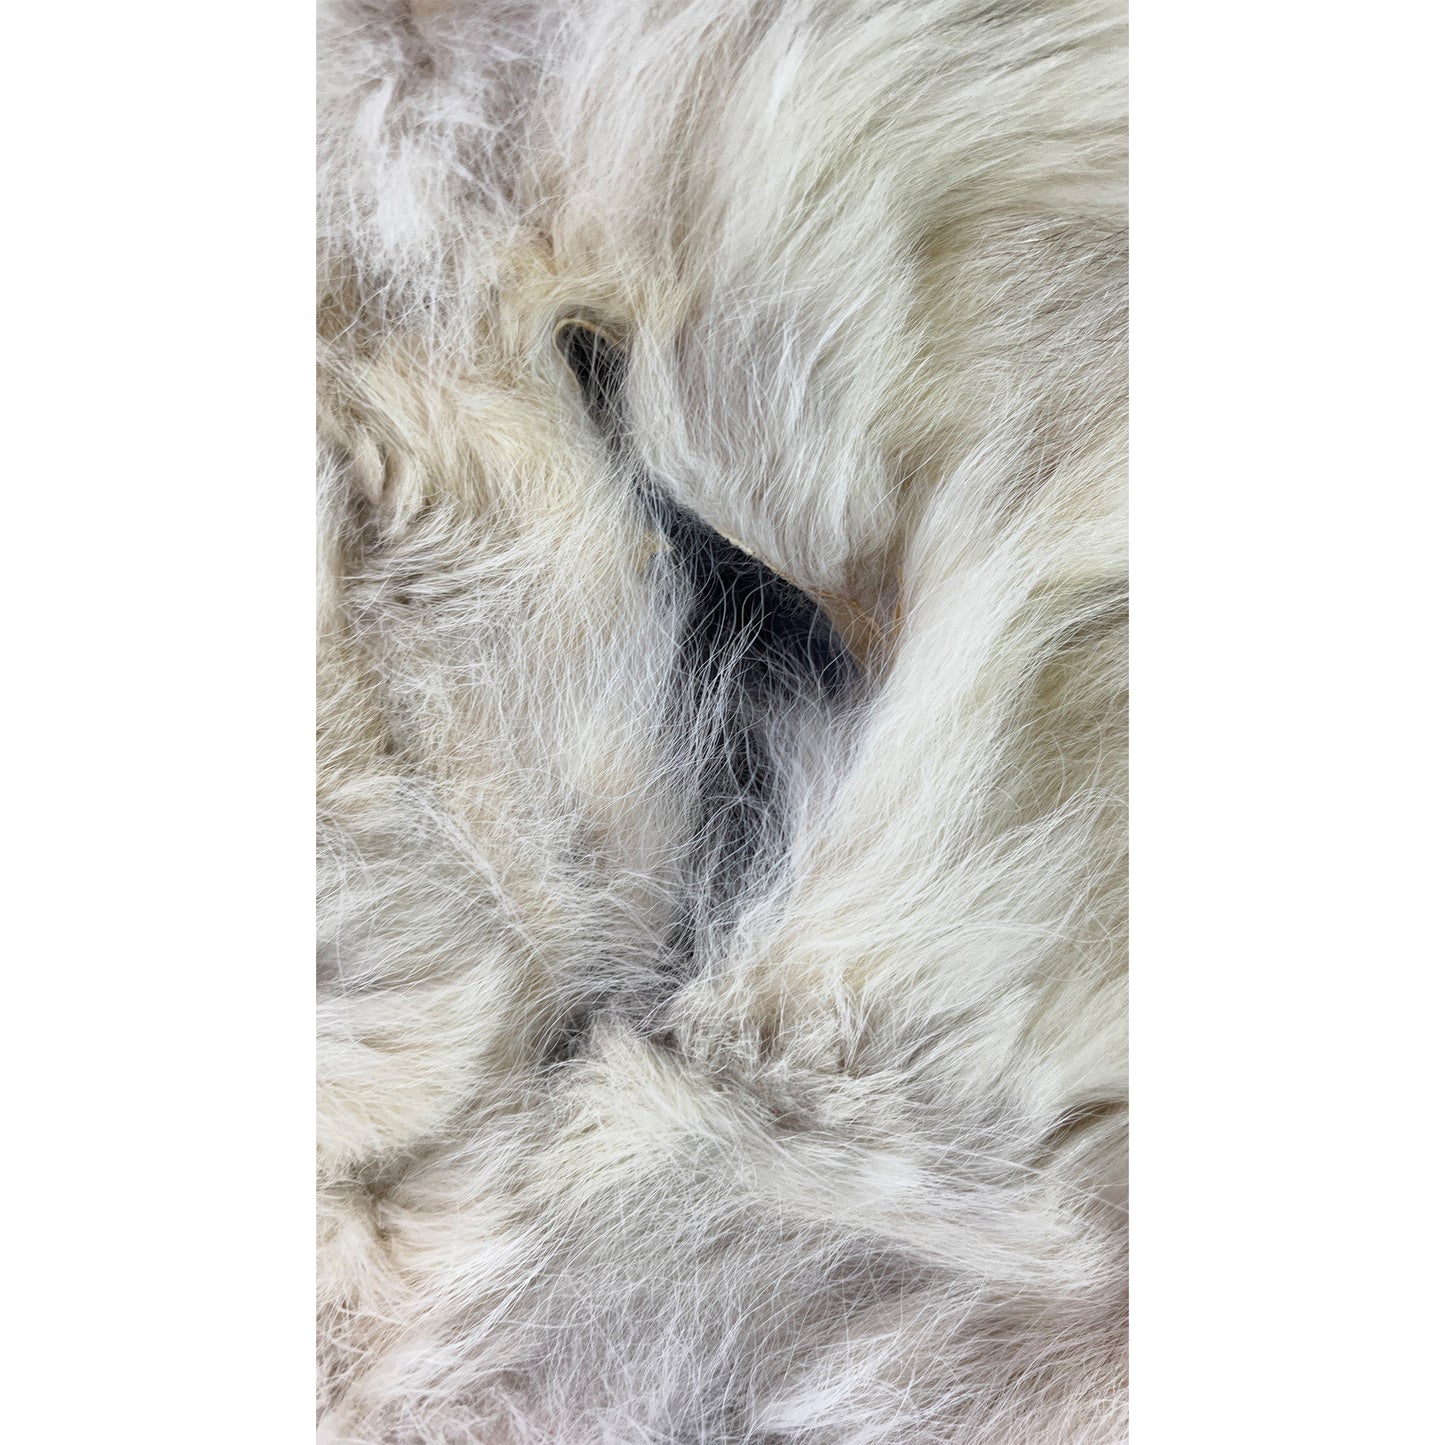 Cape Fur Lining Embroidery & Tassel Details Gray, Cream Size L/ XL SKU 000378-1